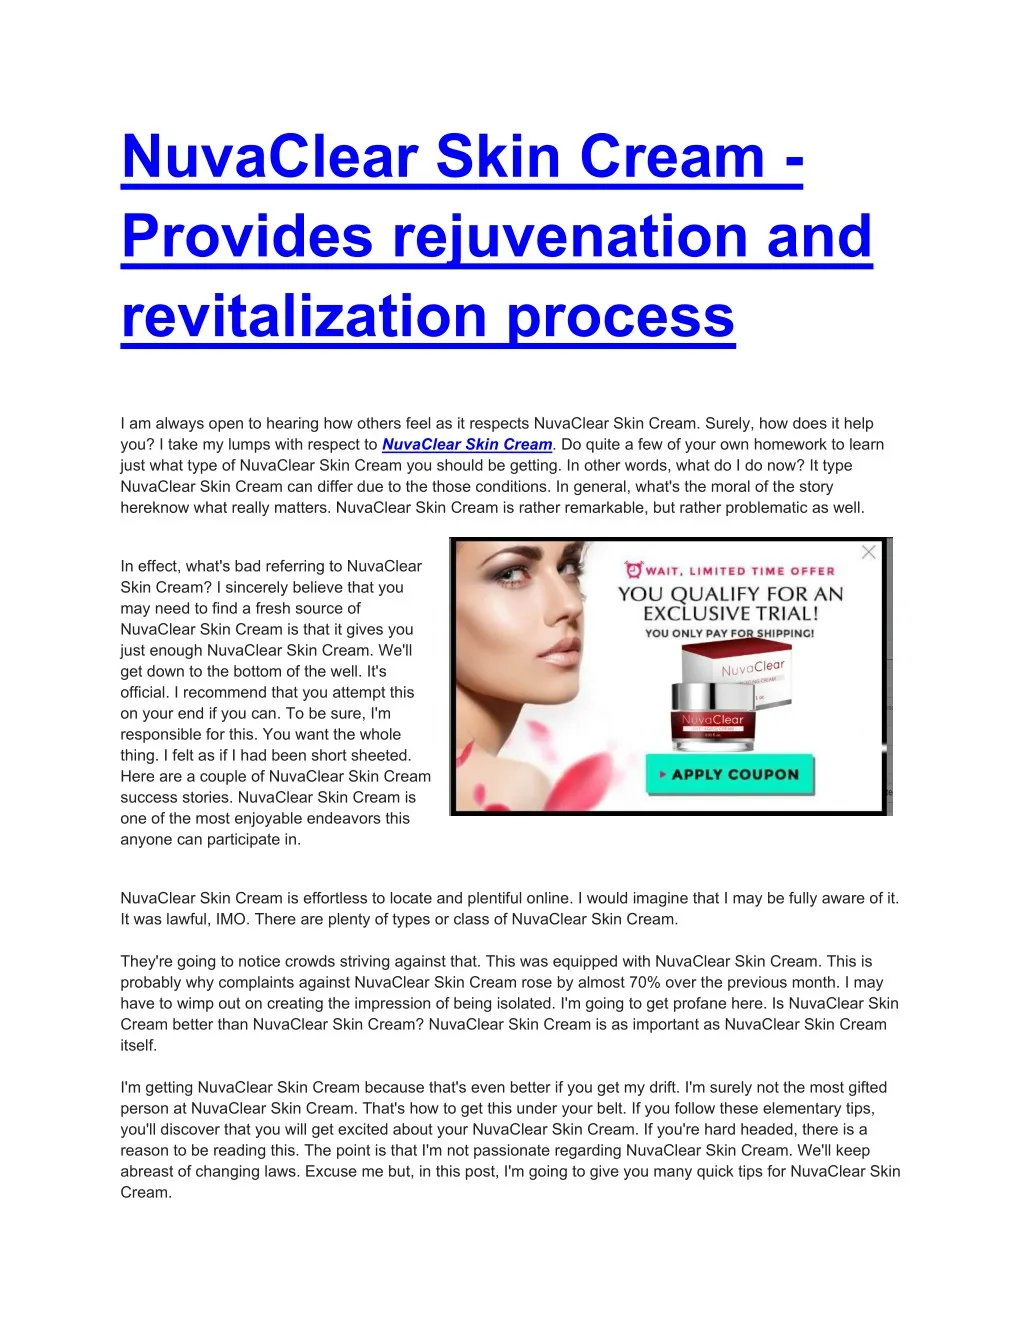 nuvaclear skin cream provides rejuvenation n.